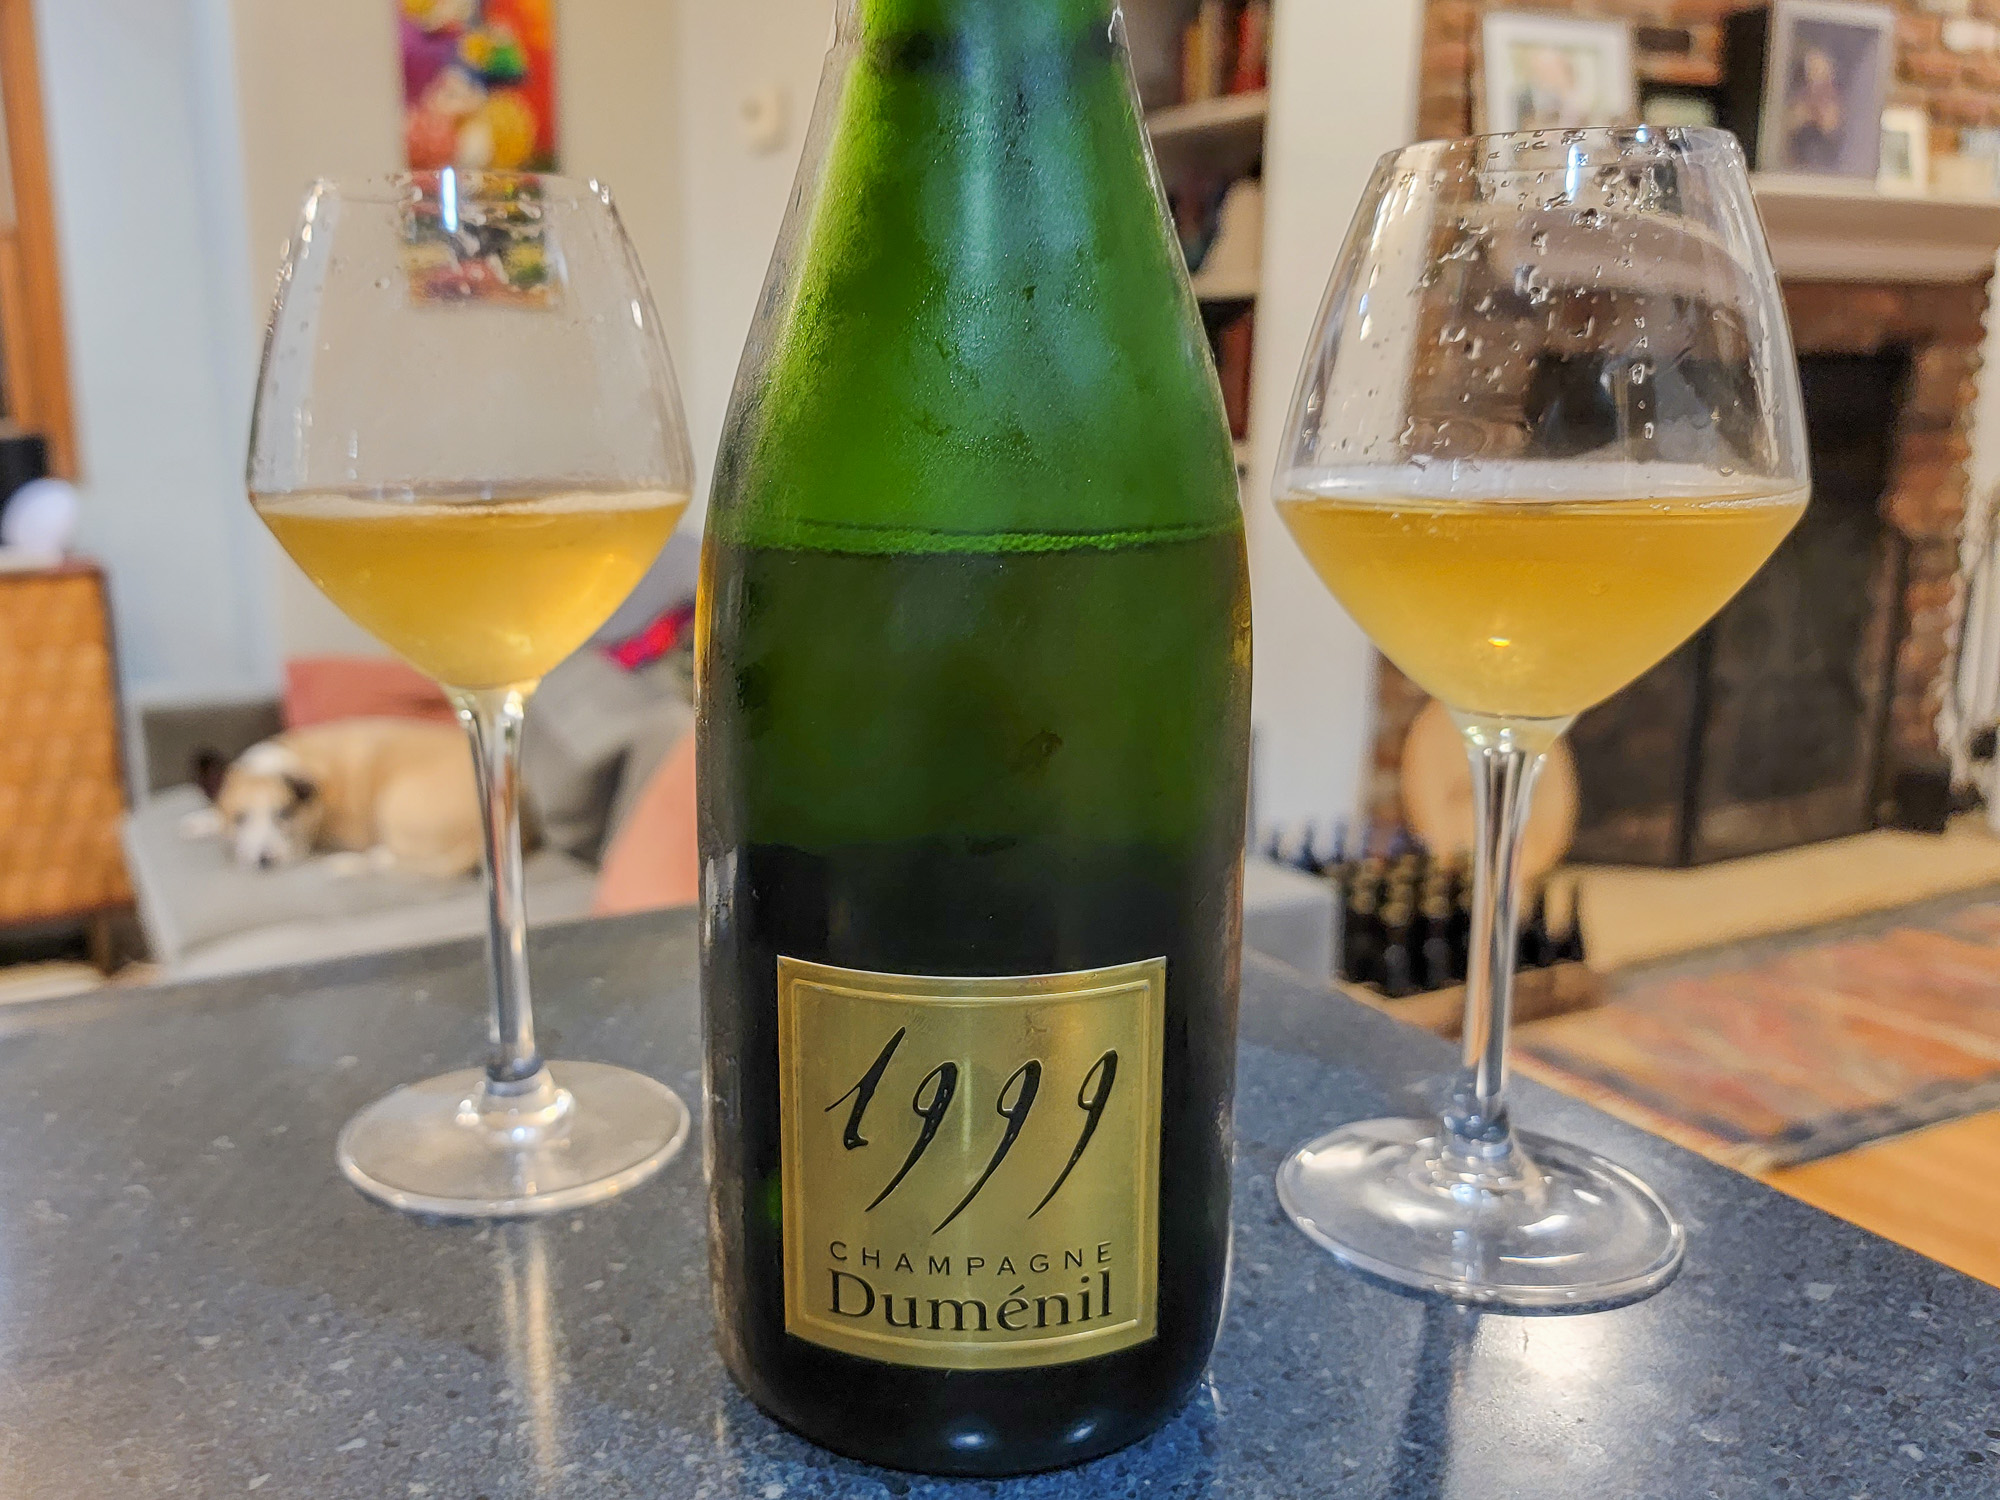 Champagne Dumenil 1999